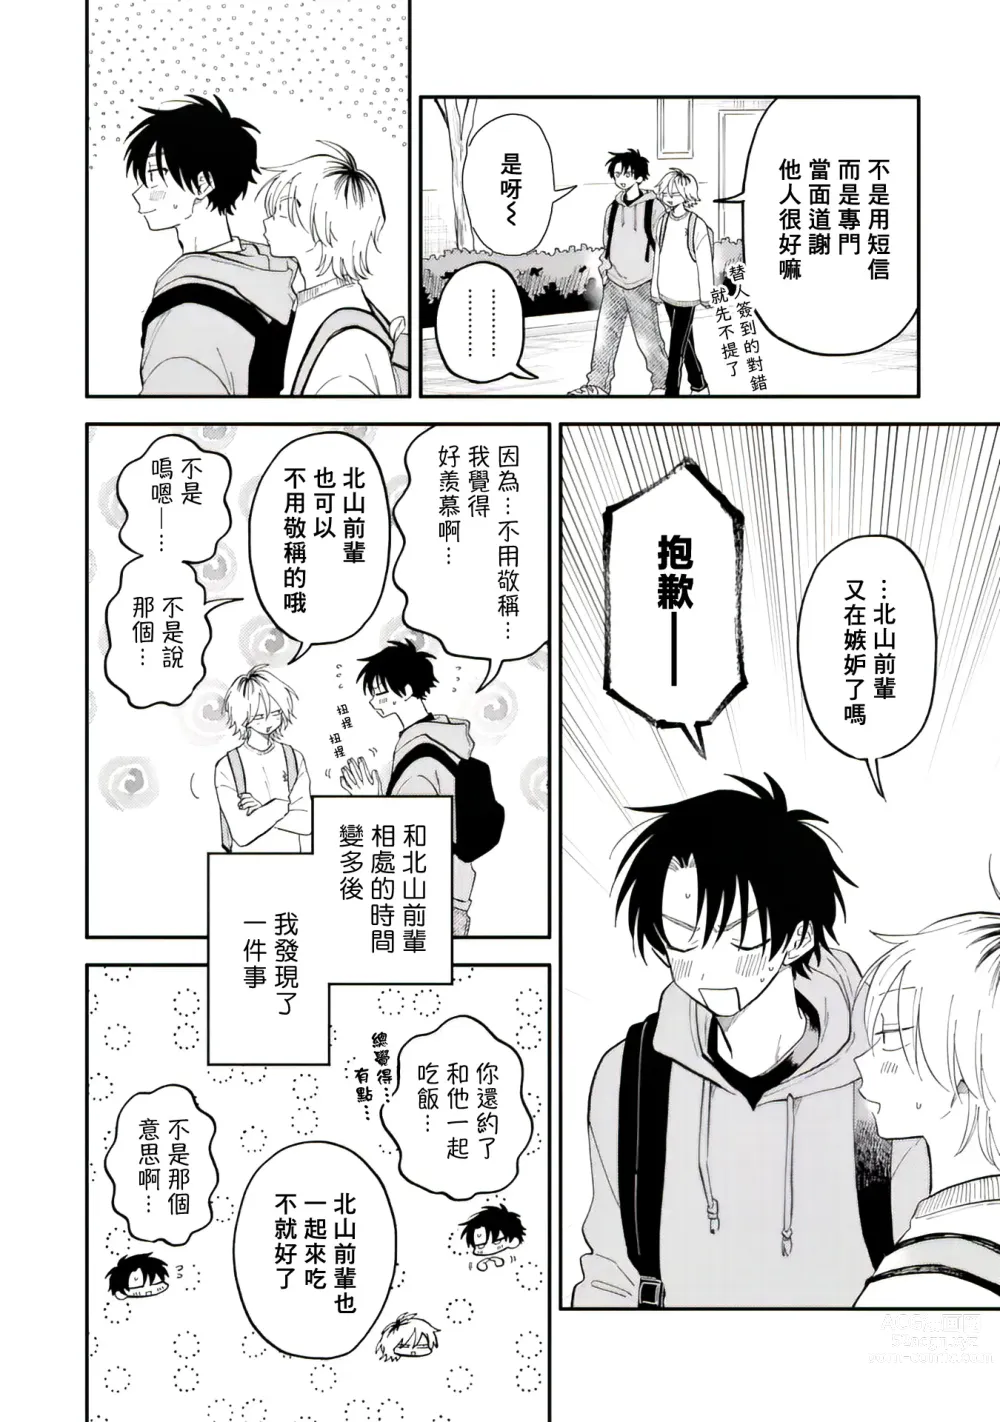 Page 9 of manga 北山君与南谷君 2